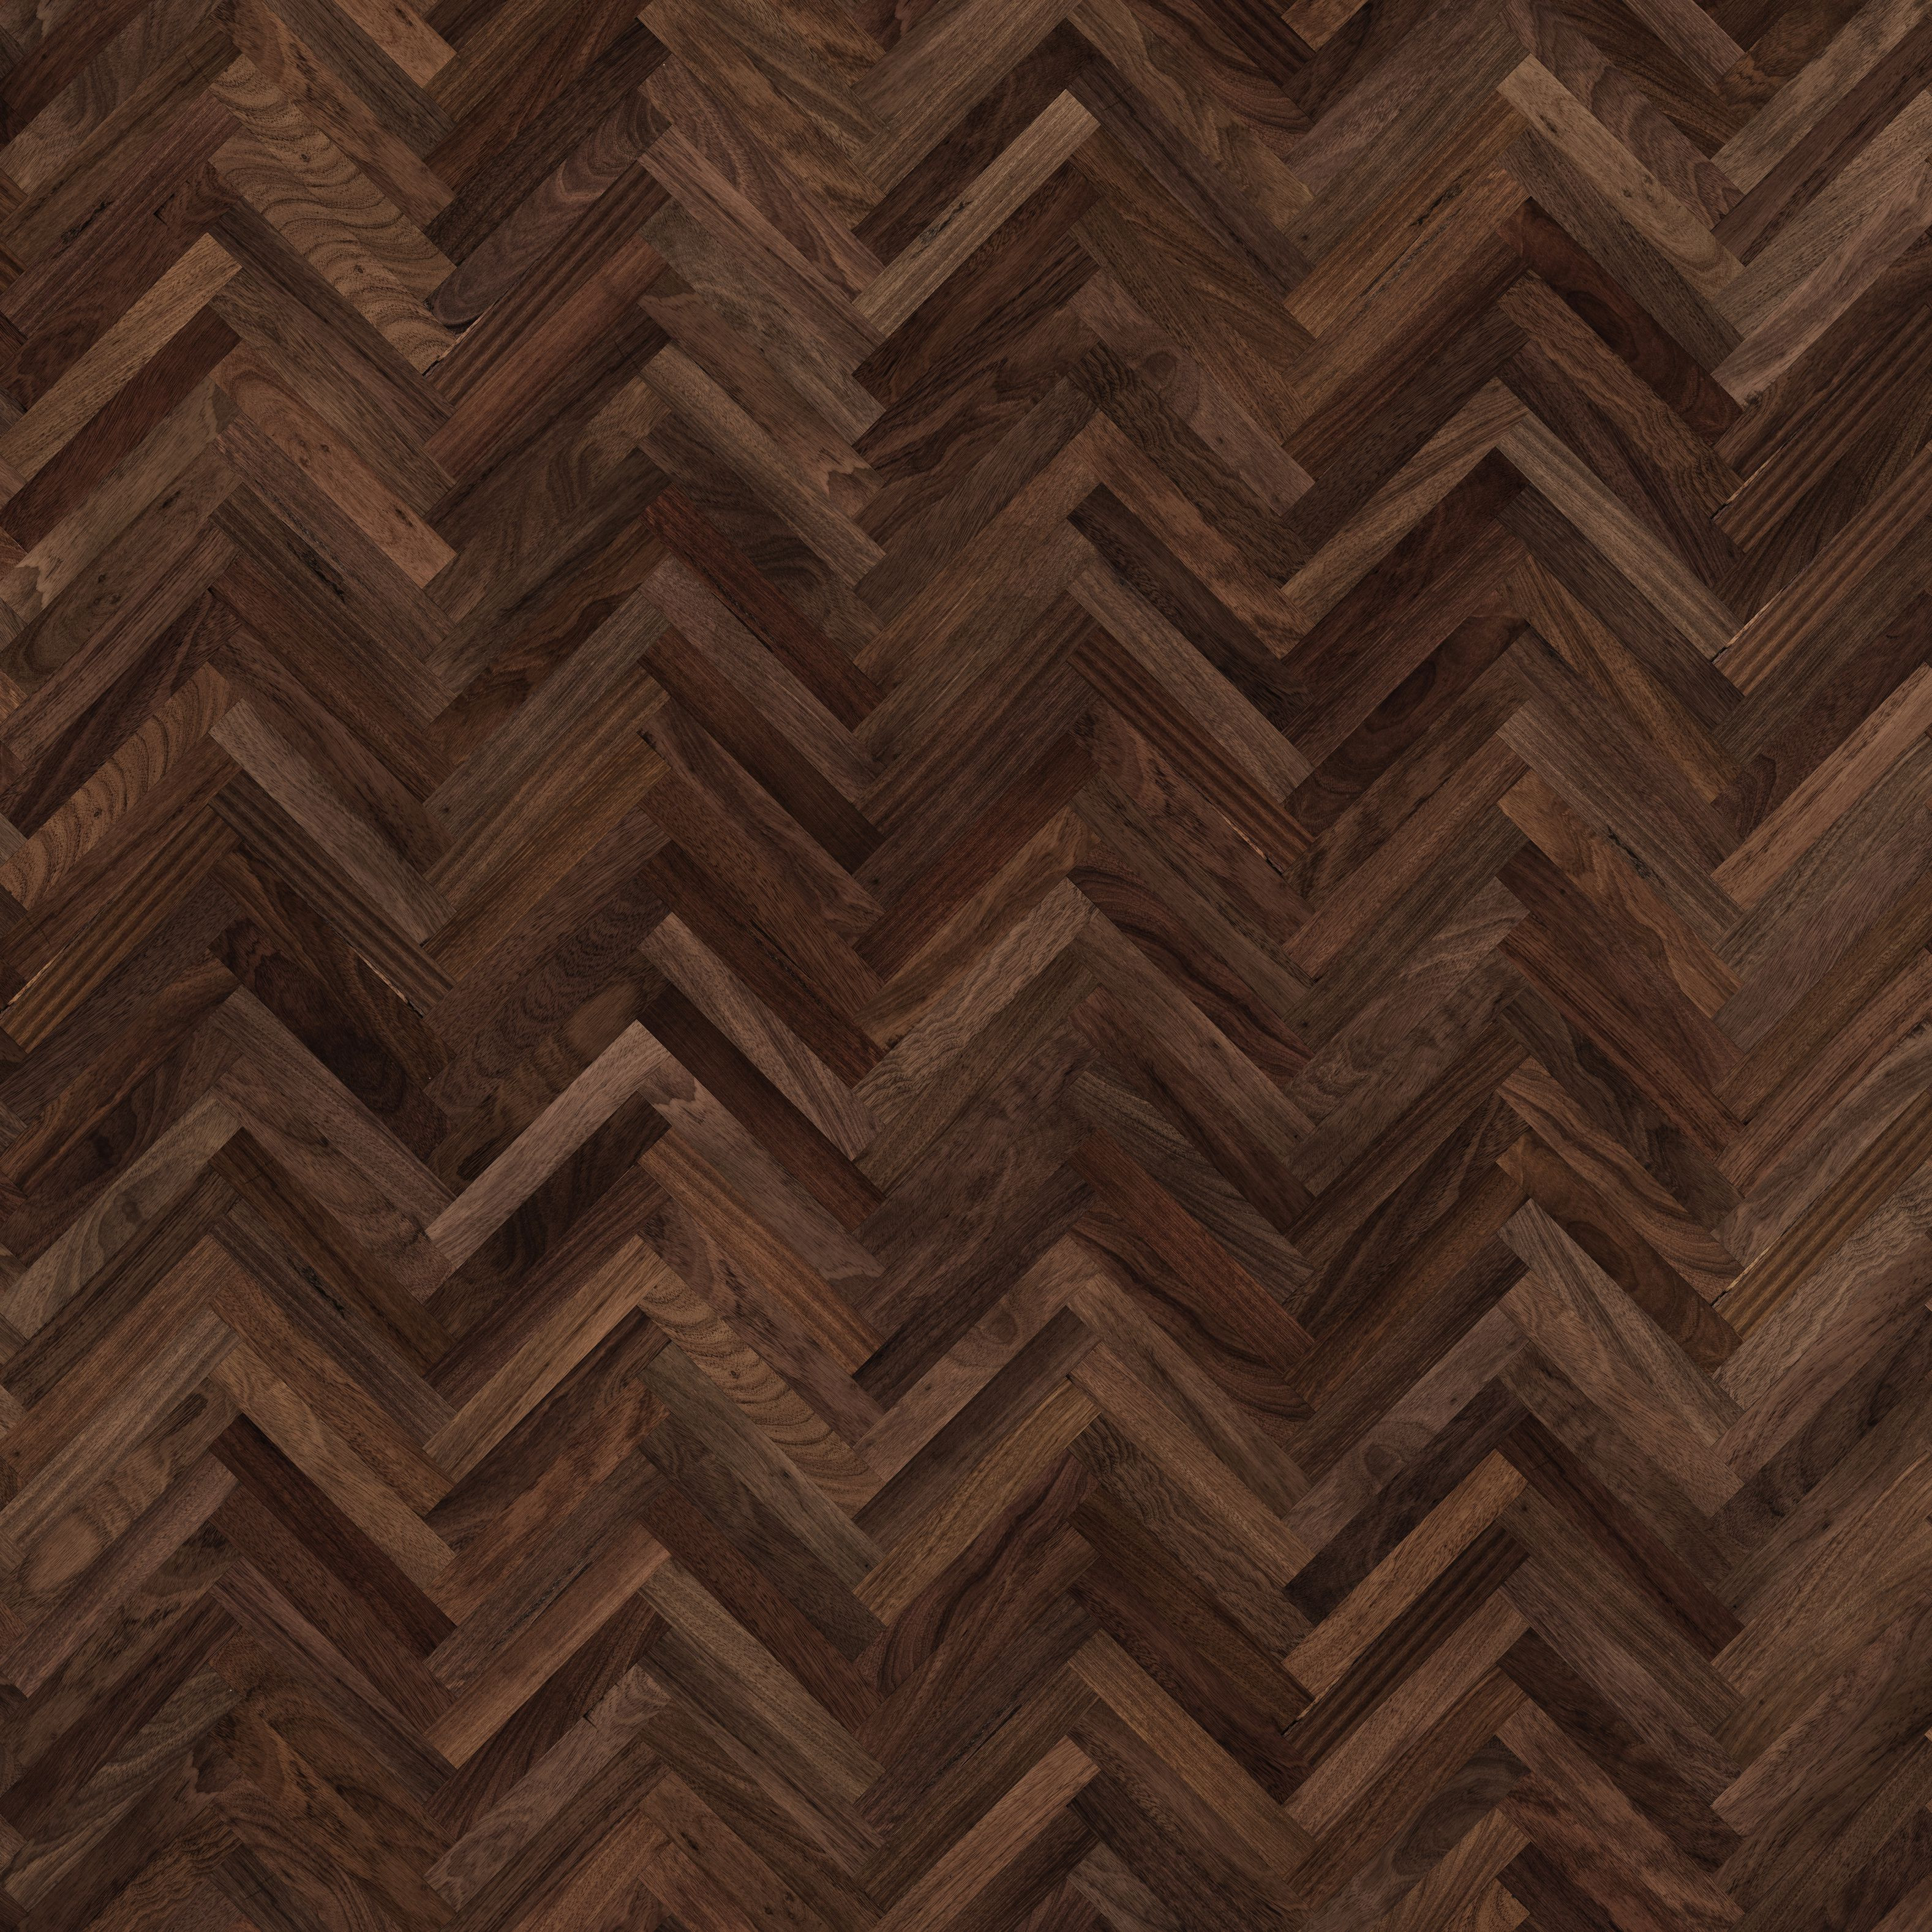 teak and hardwood floors reno nv of parquet wood flooring pertaining to dark brown wood background xxxl 171110782 587c06b75f9b584db316fb21